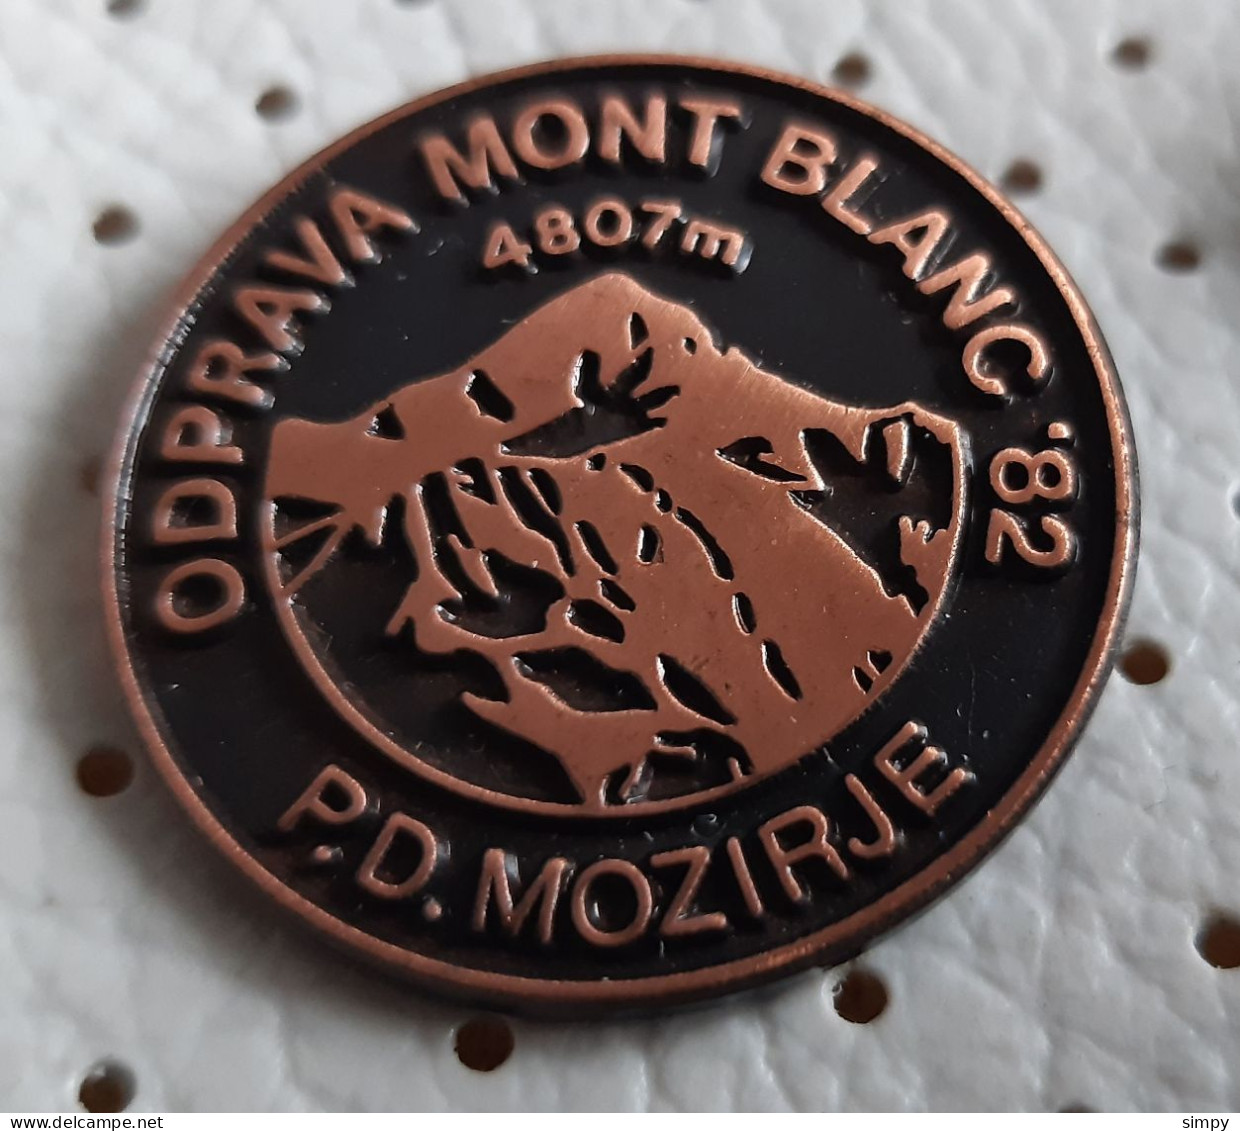 Yugoslav Expedition MONT BLANC 4807m  1982 PD Mozirje Slovenia Alpinism Mountaineering Pin - Alpinismo, Escalada